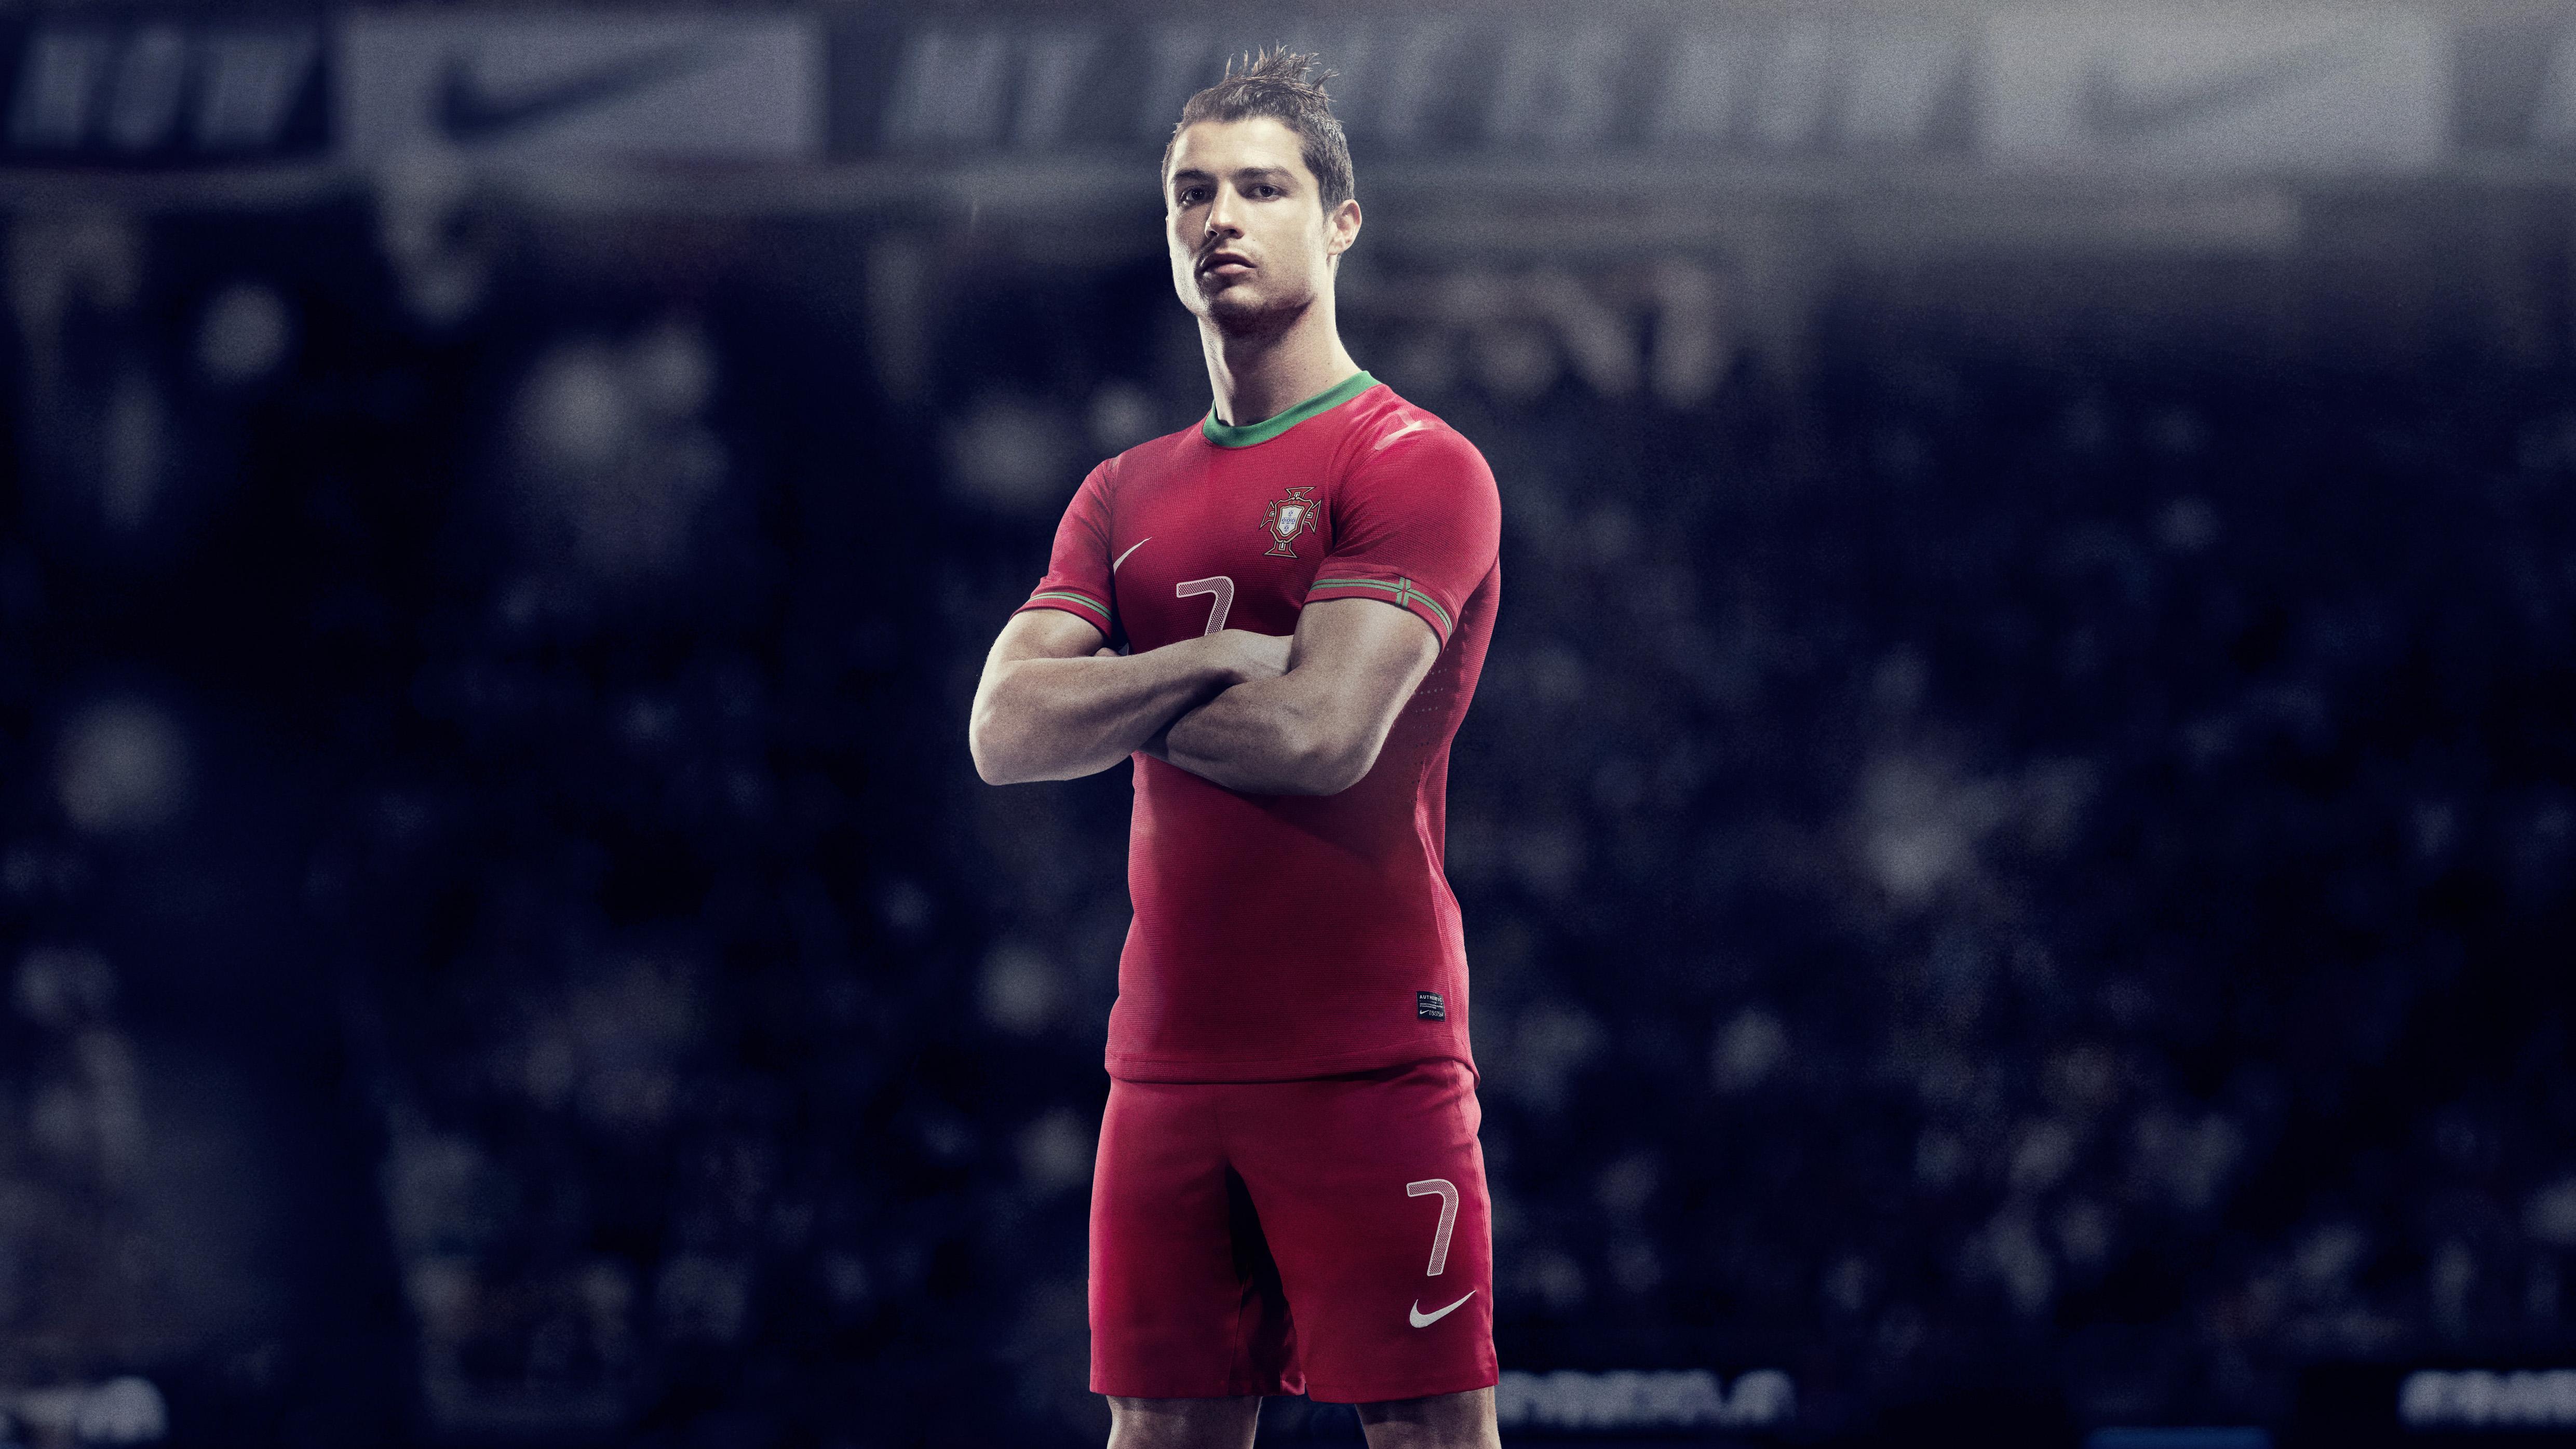 Cristiano Ronaldo 5k, HD Sports, 4k Wallpaper, Image, Background, Photo and Picture